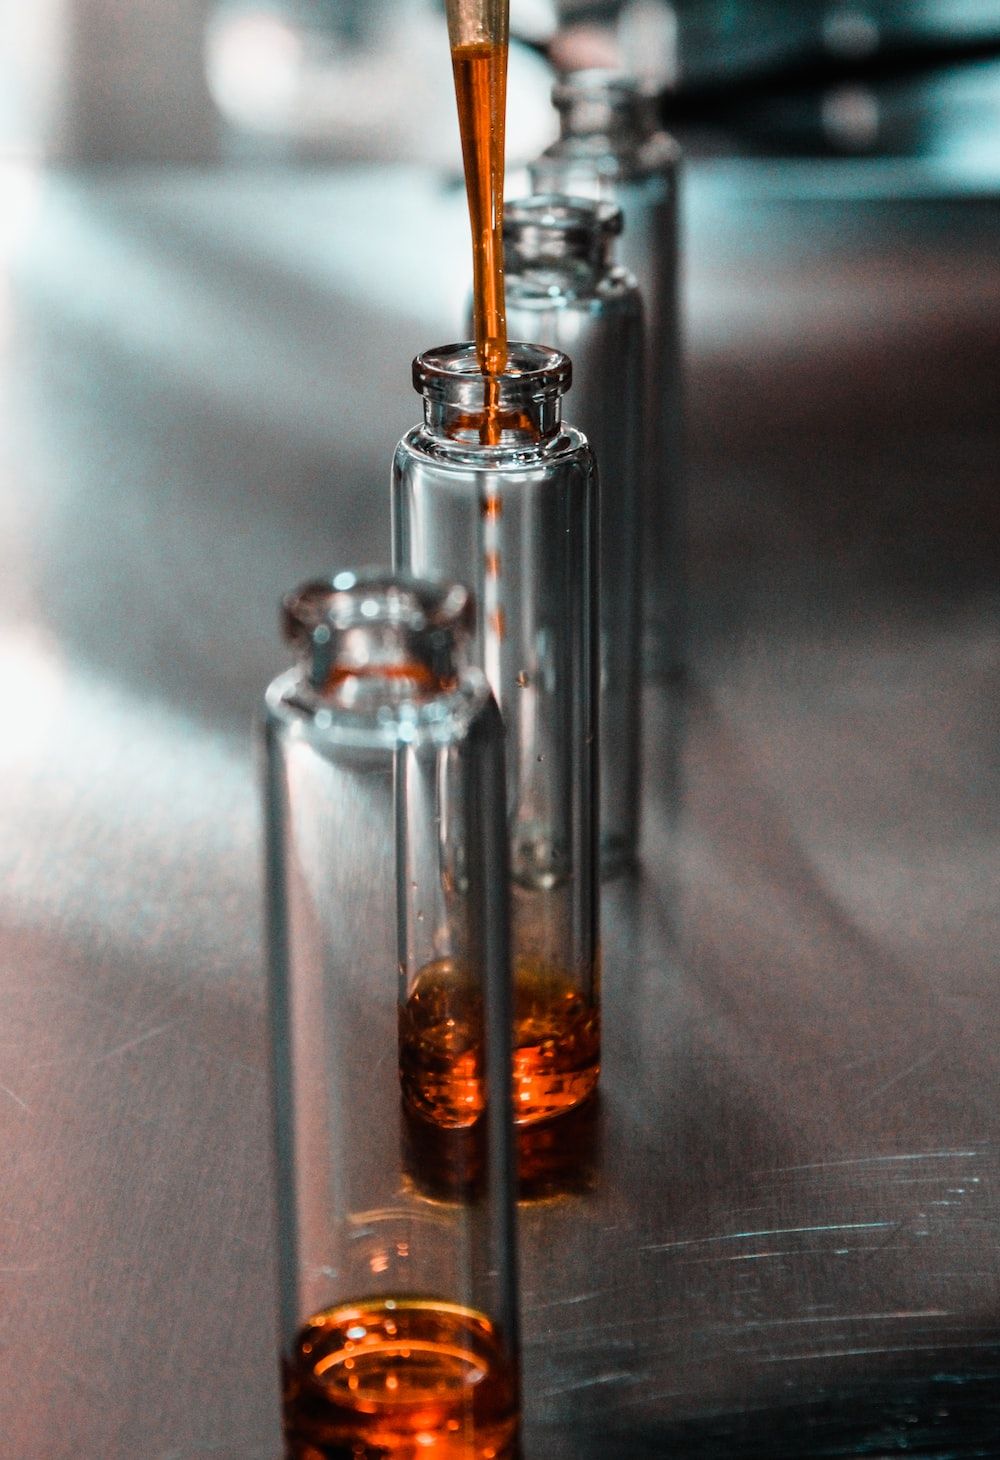 A person pouring liquid into small glasses - Chemistry